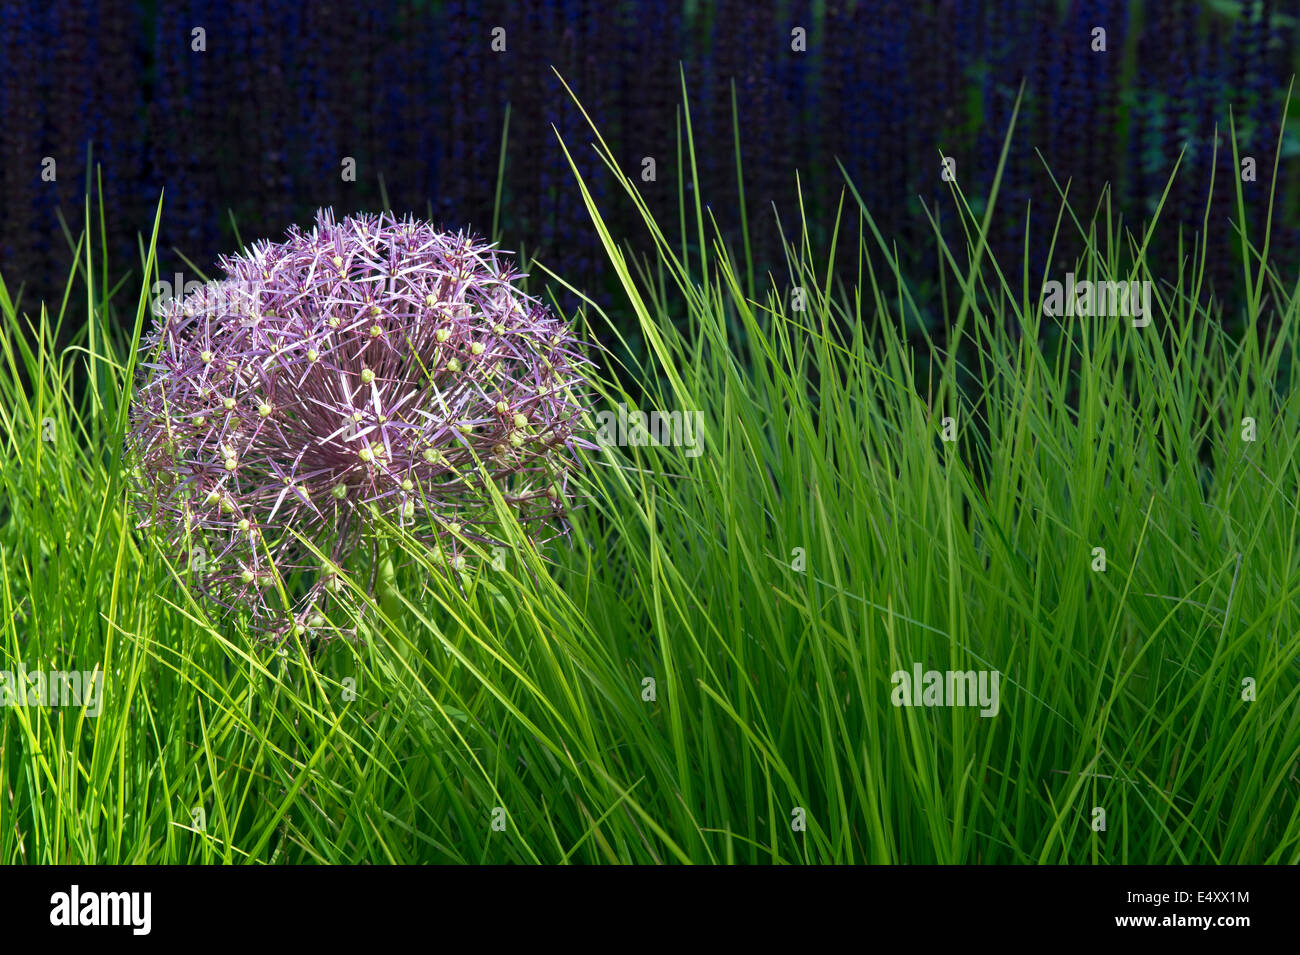 Allium Christophii flowers in long grass. Star of Persia Stock Photo